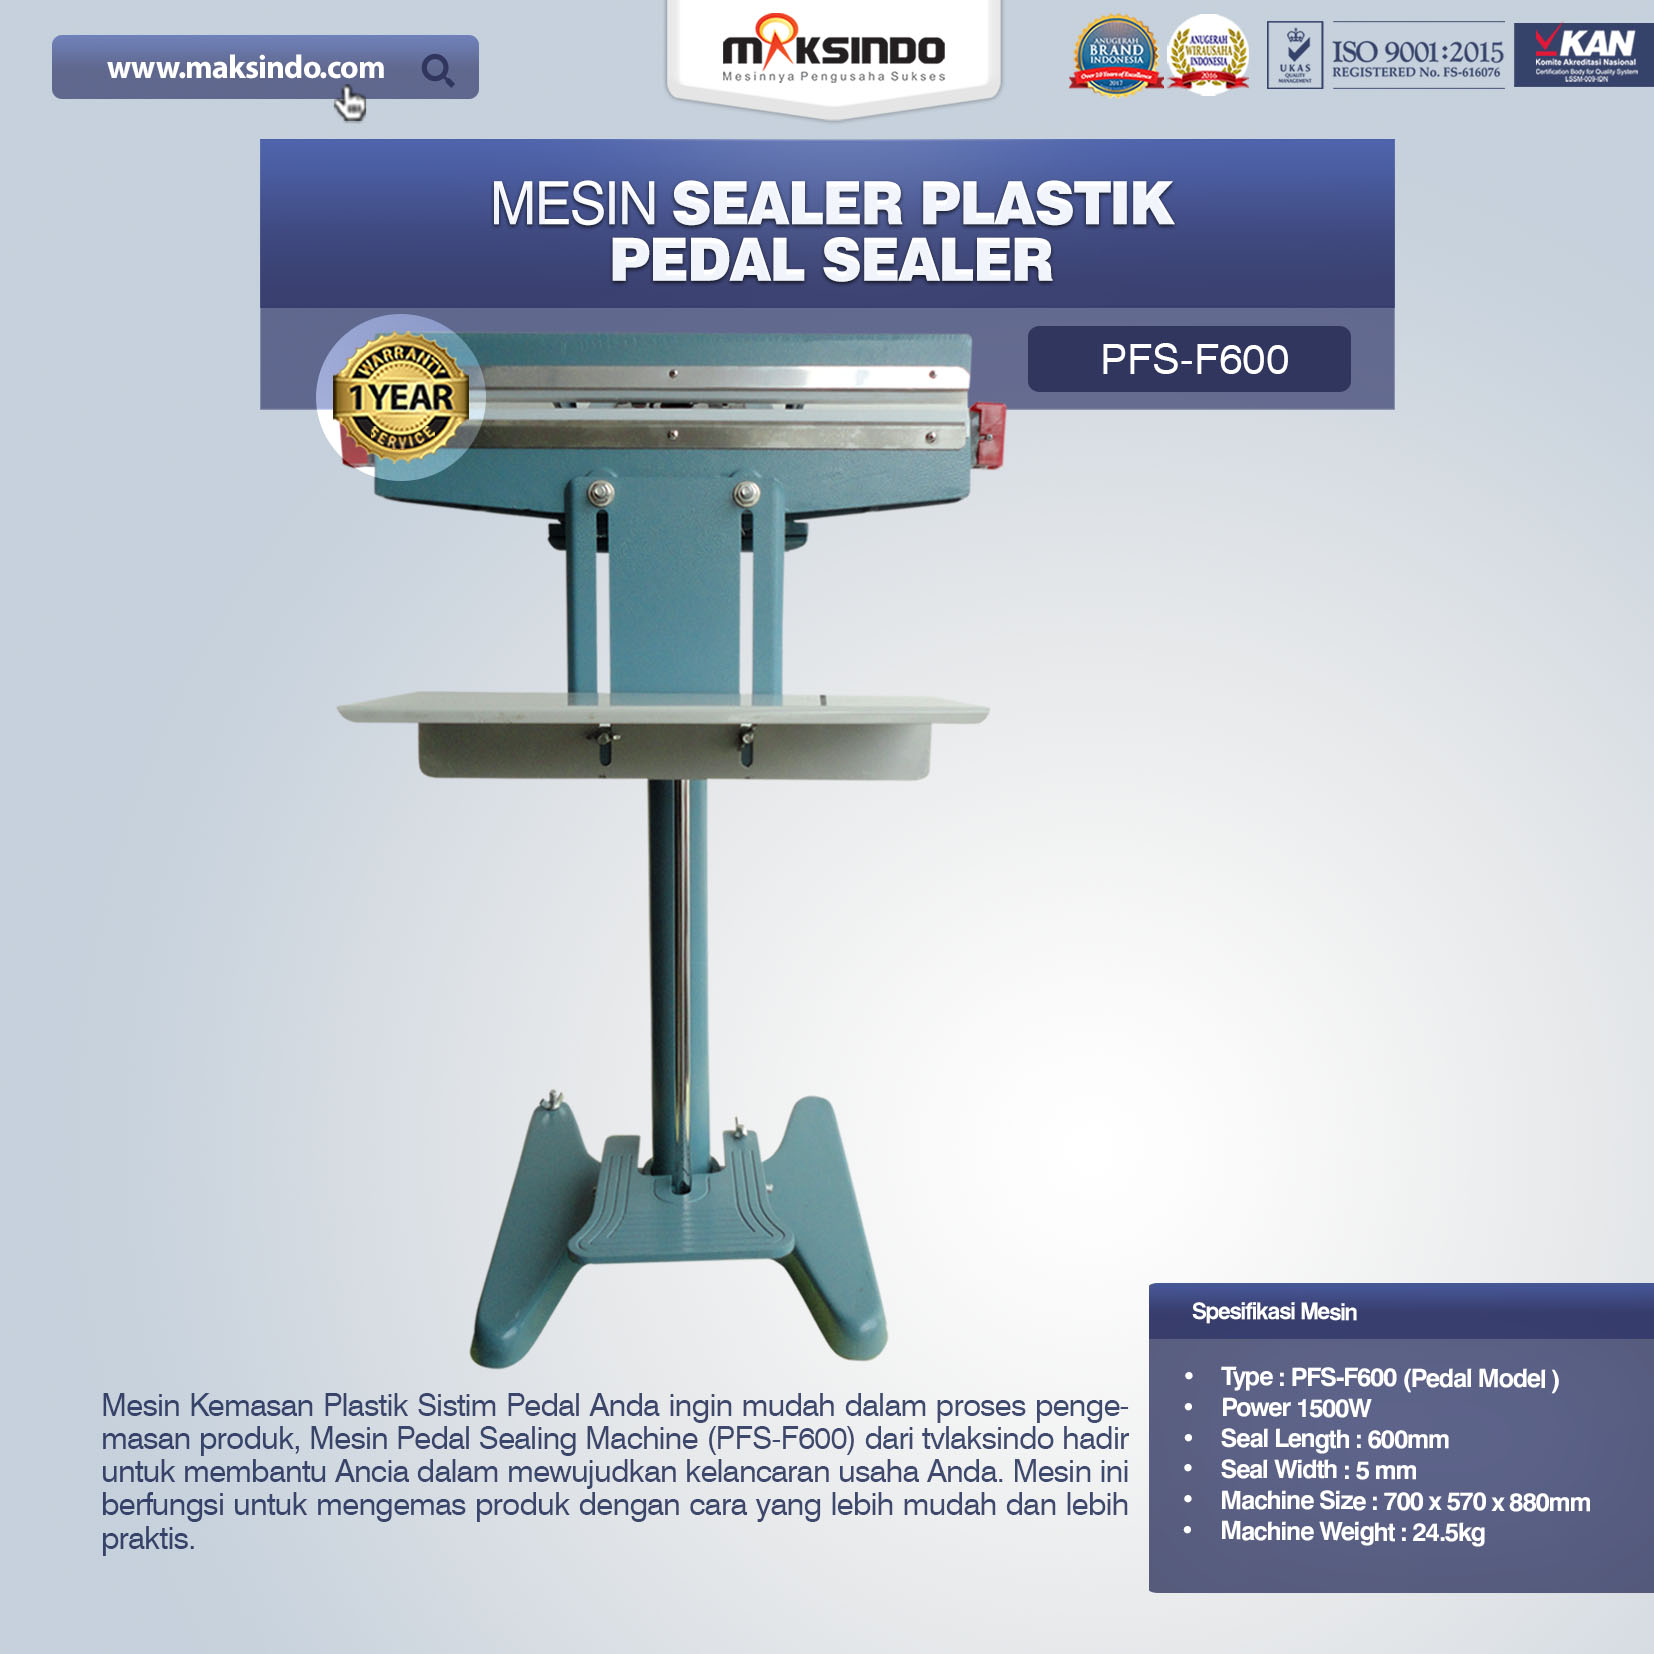 Jual Pedal Sealing Machine (PFS-F600) Di Pekanbaru